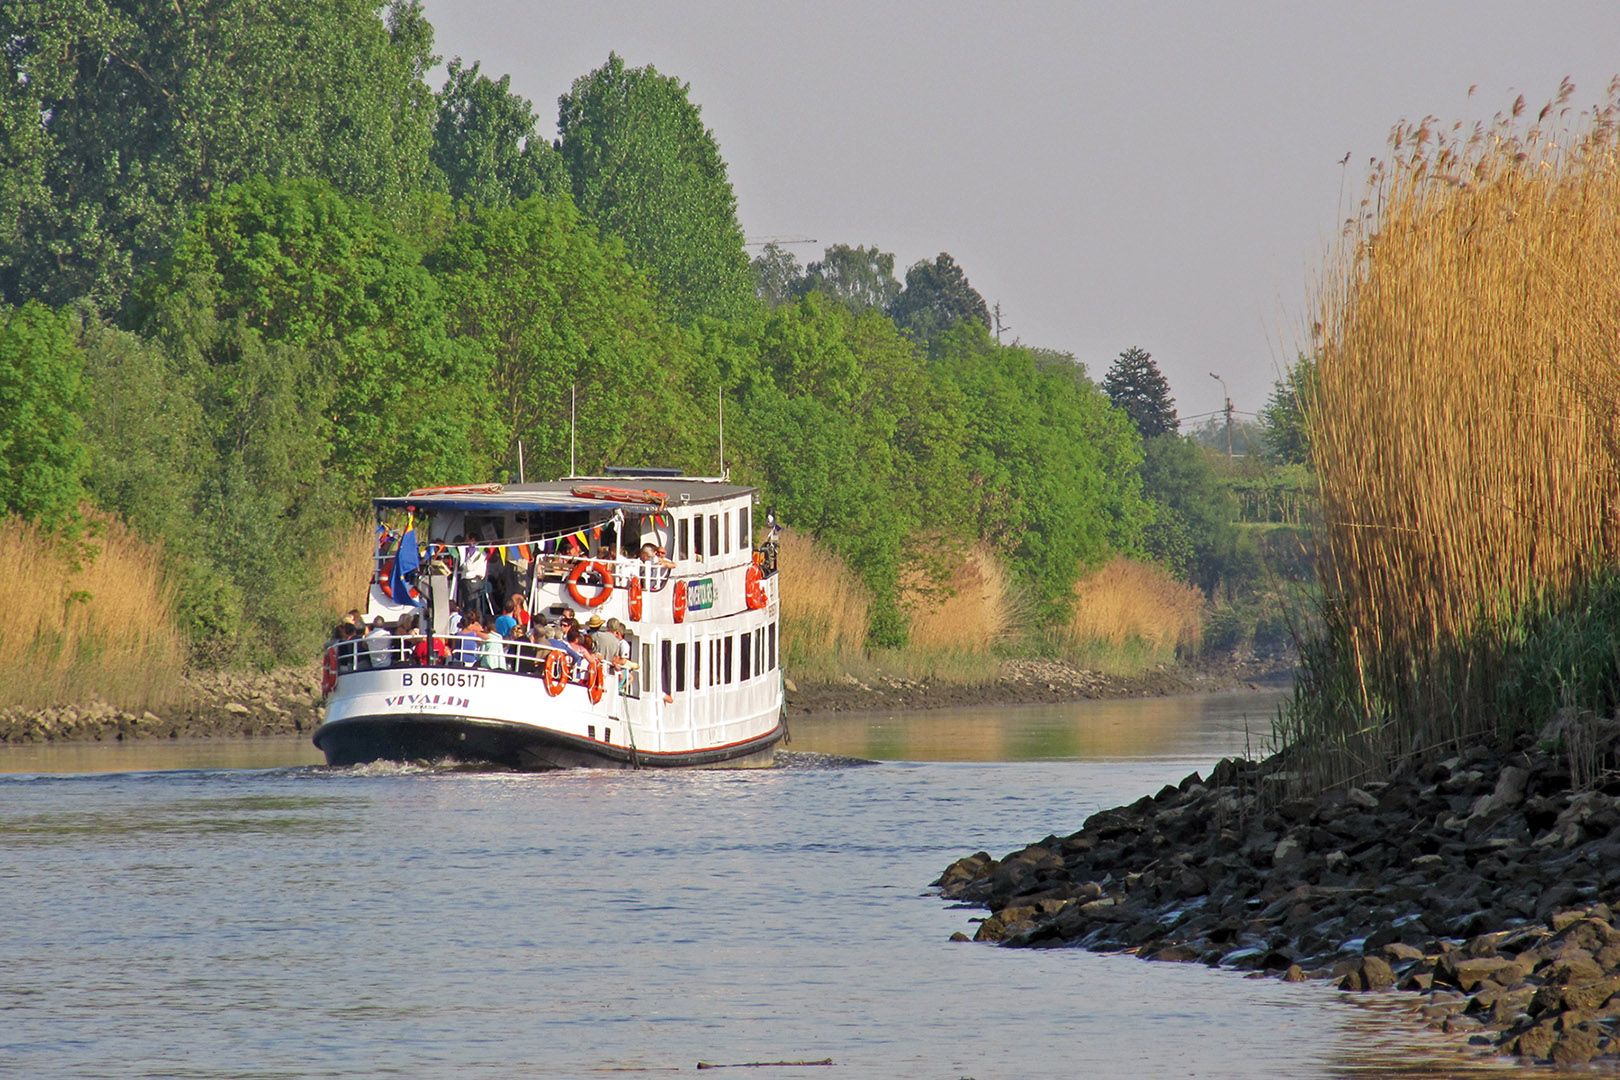 fotoreeks One way boat trip from Schellebelle to Dendermonde.